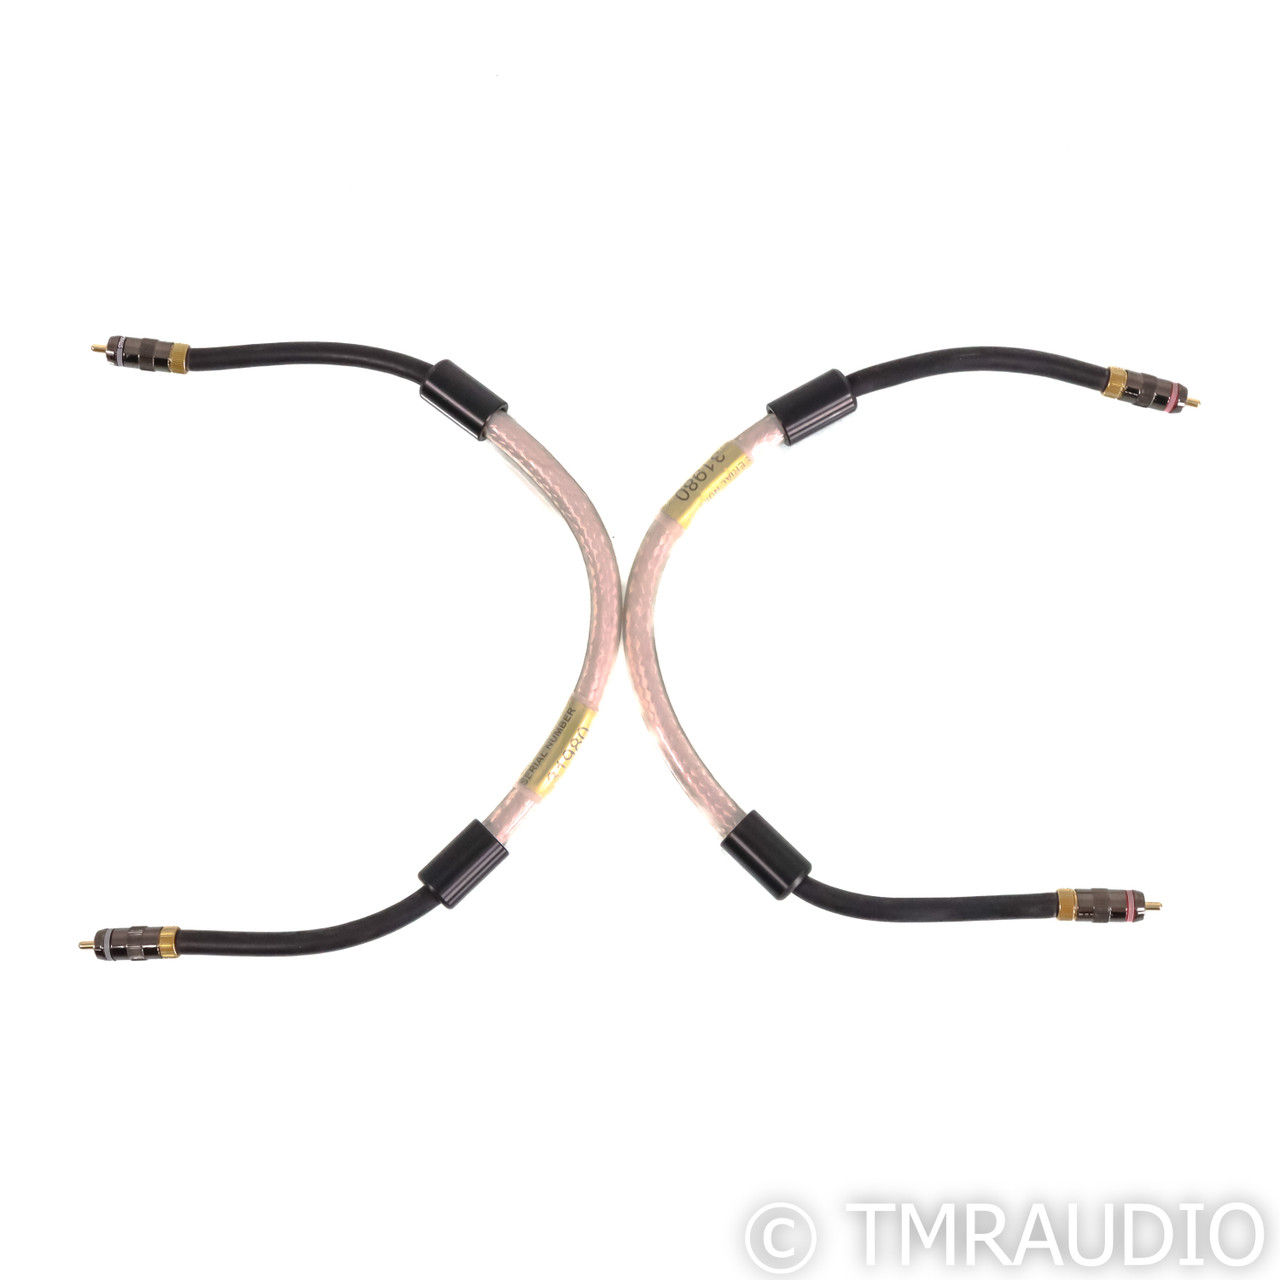 Straight Wire Serenade 3 RCA Cables; 0.5m Pair Intercon... 2